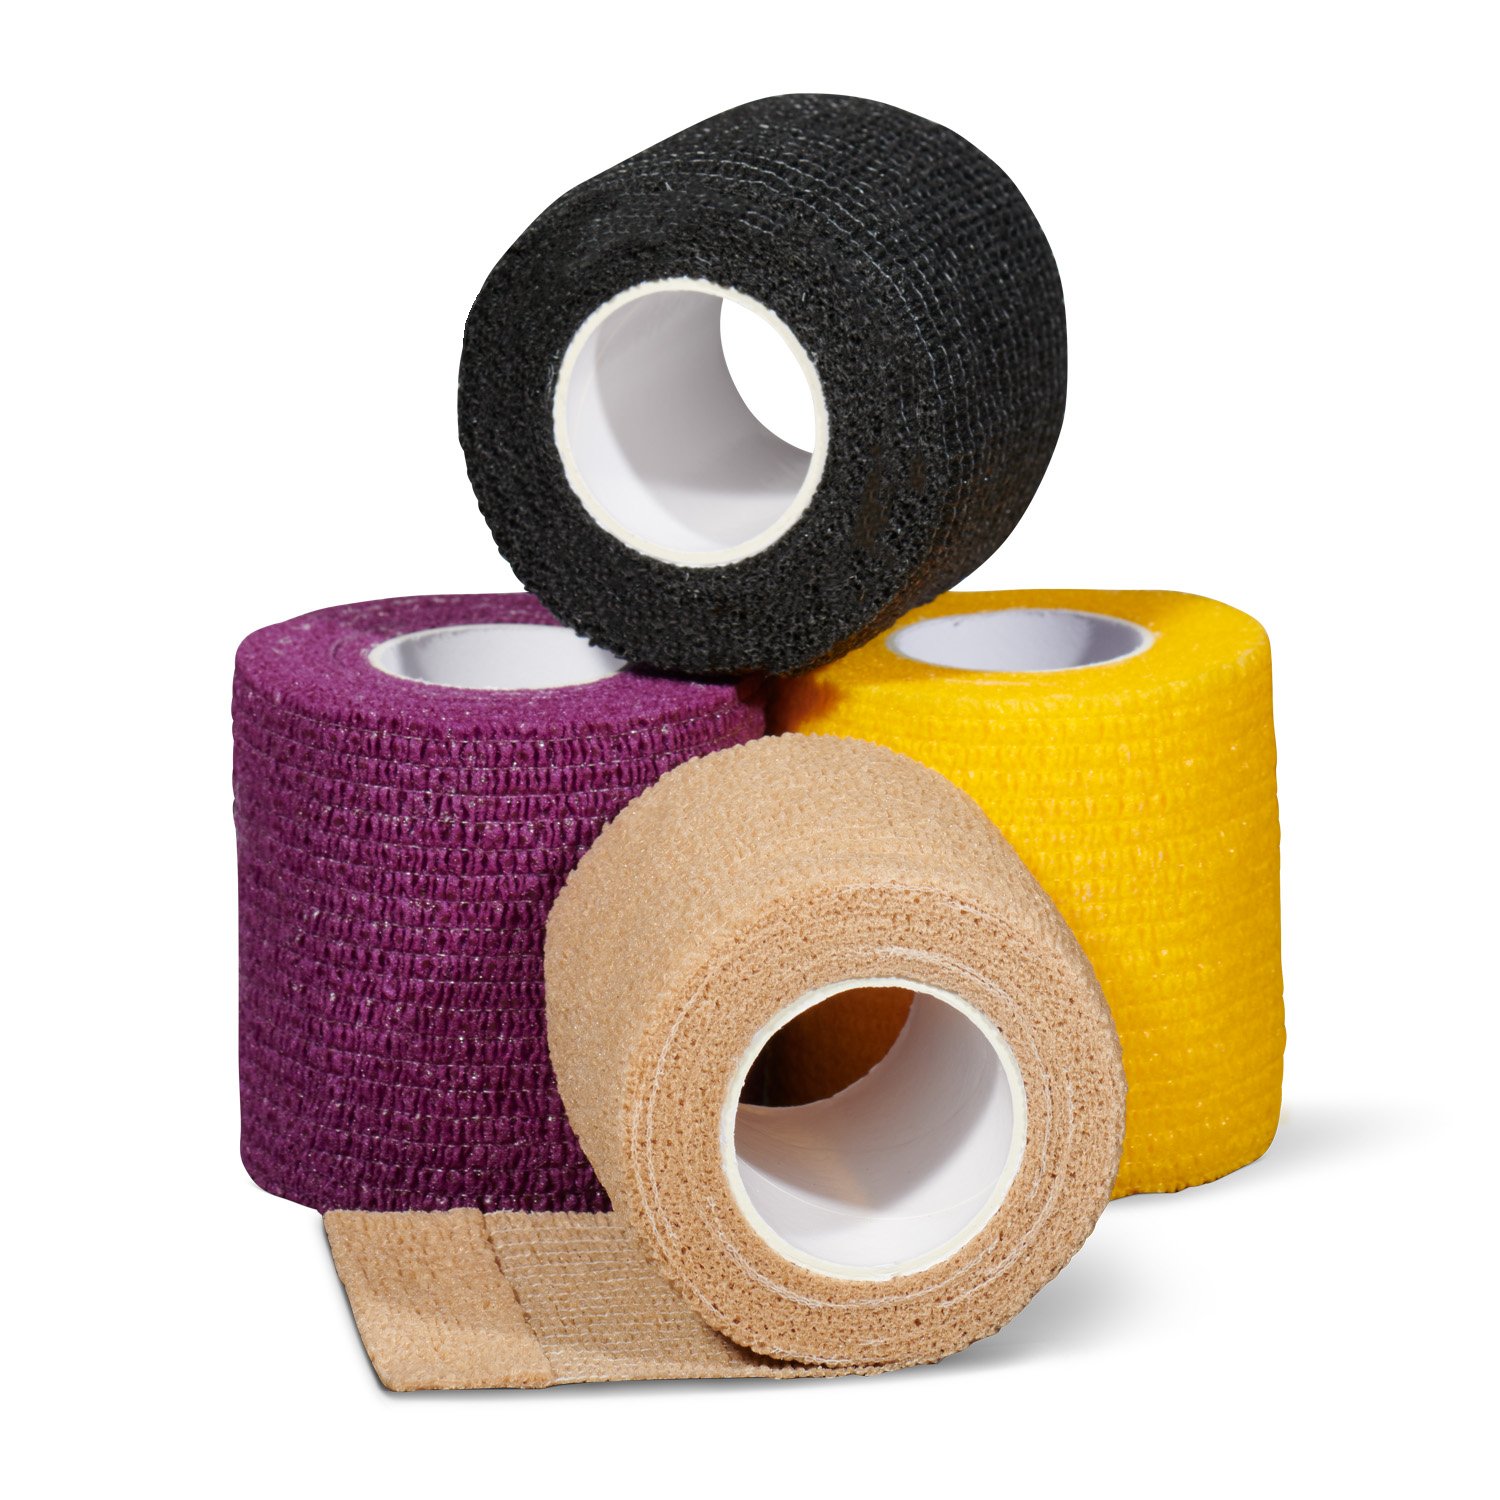 Gladiator Sports underwrap bandage per 4 rolls for sale